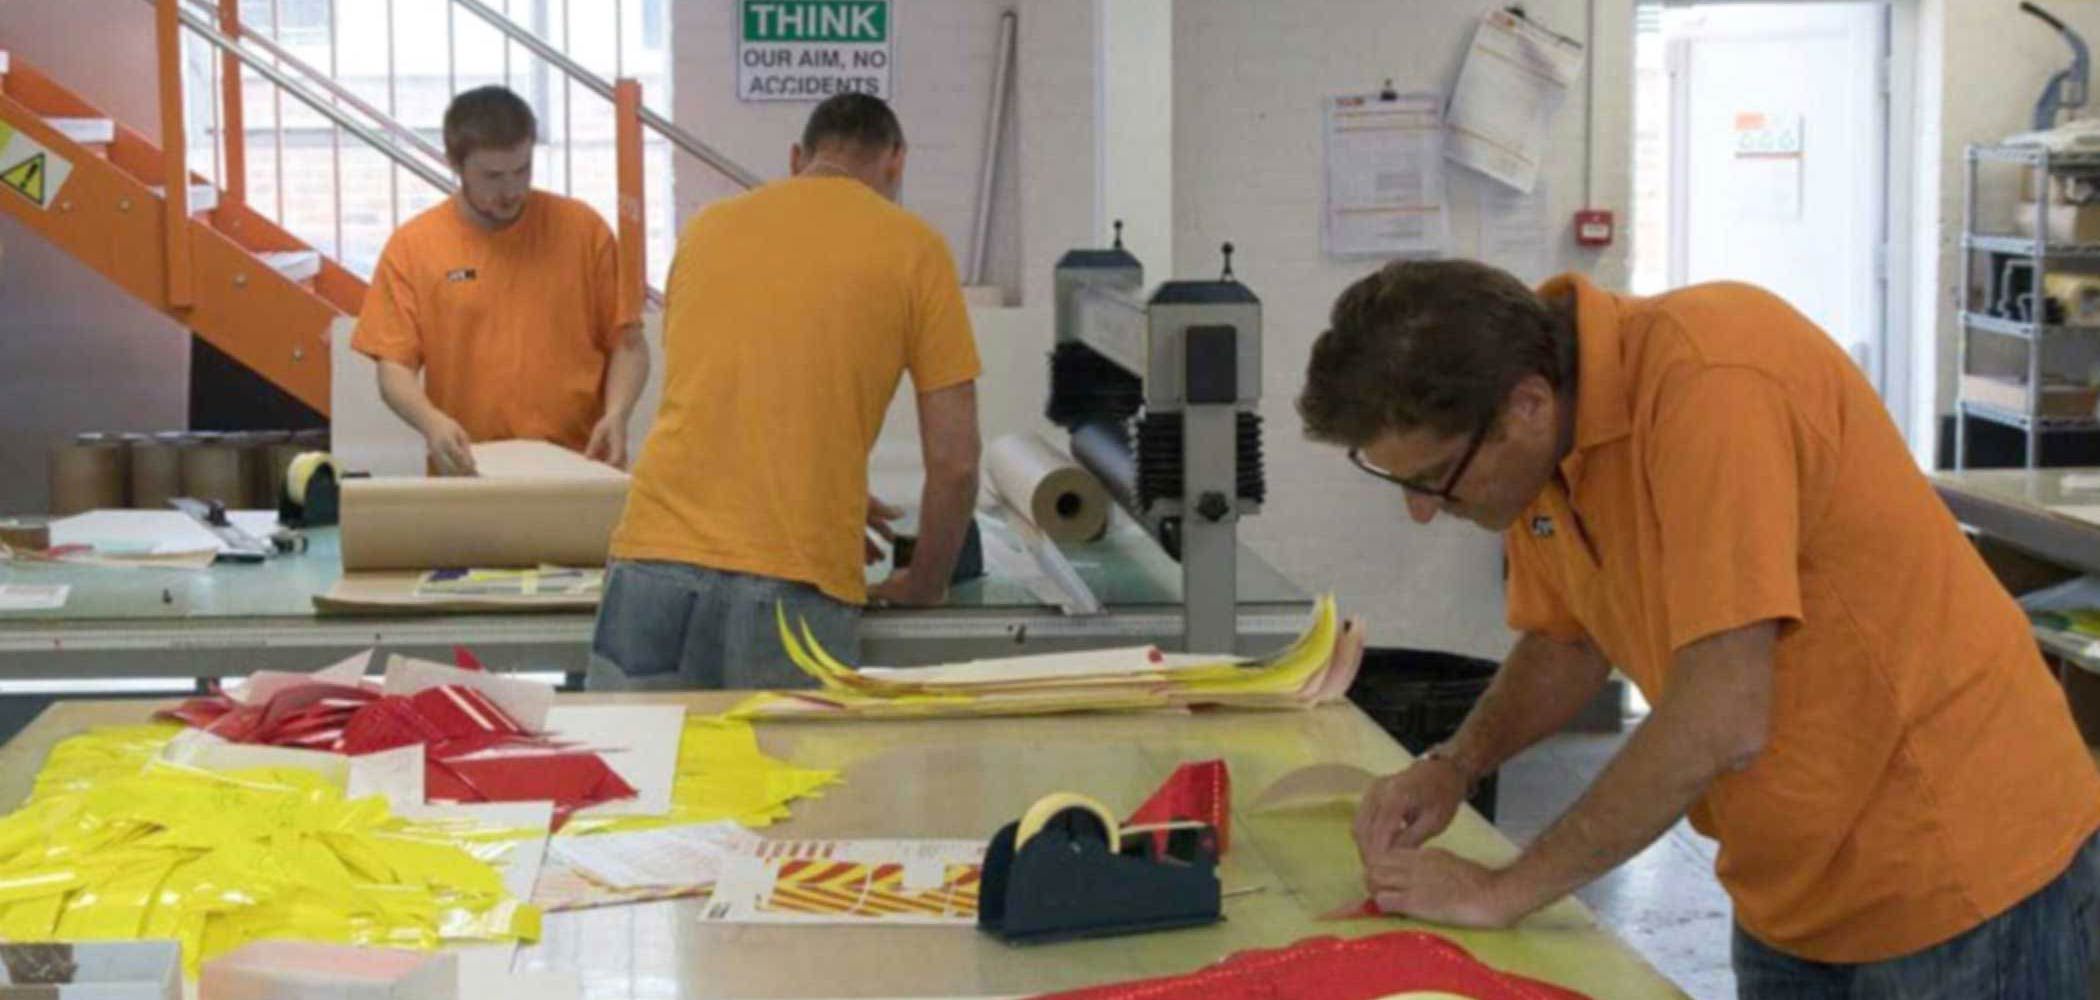 The PVL workshop with staff preparing vinyl cutouts